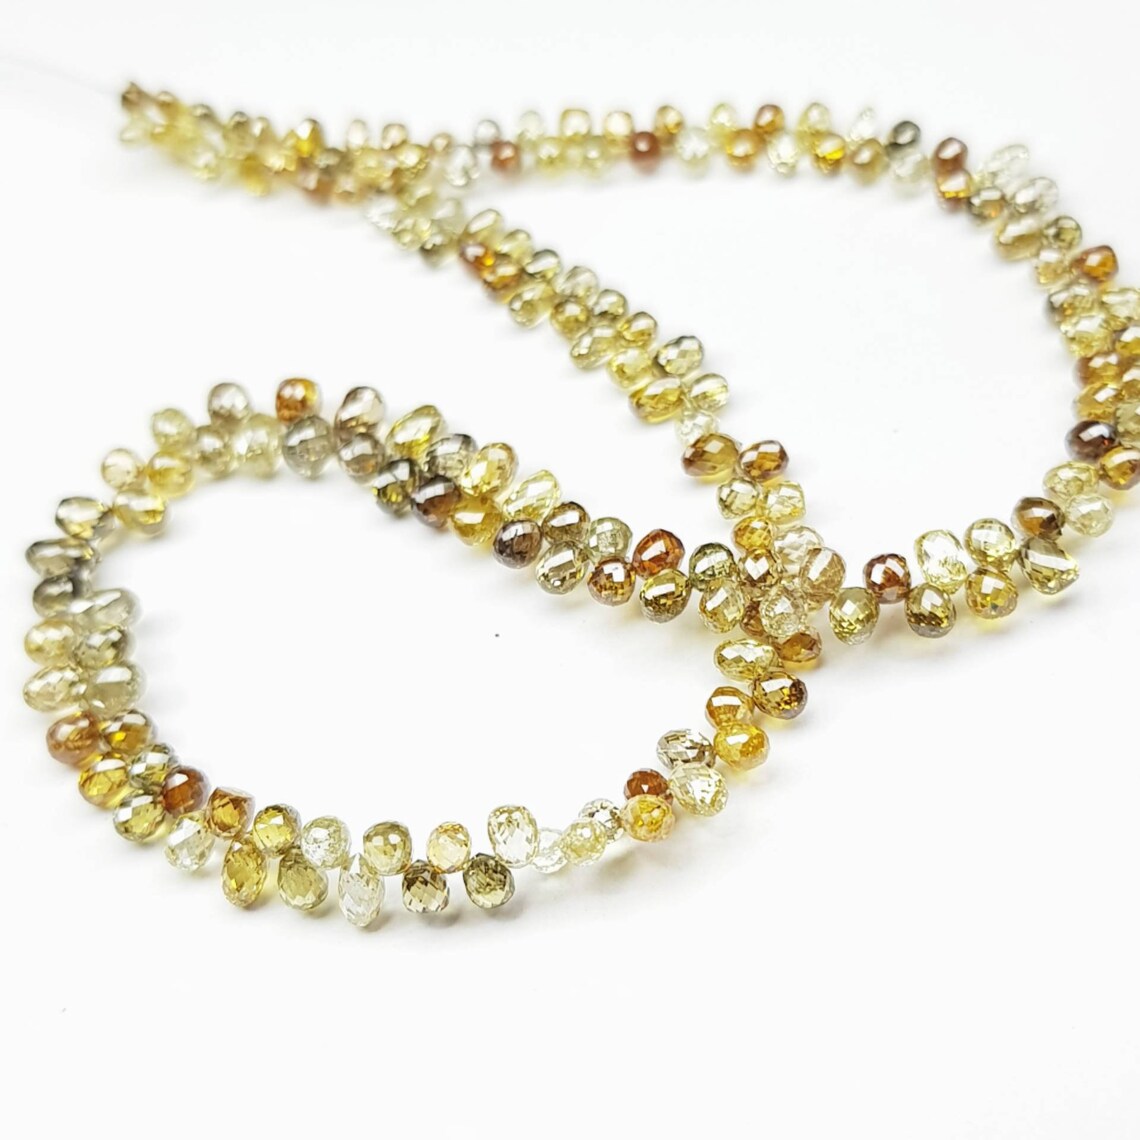 Diamond Beads Necklace